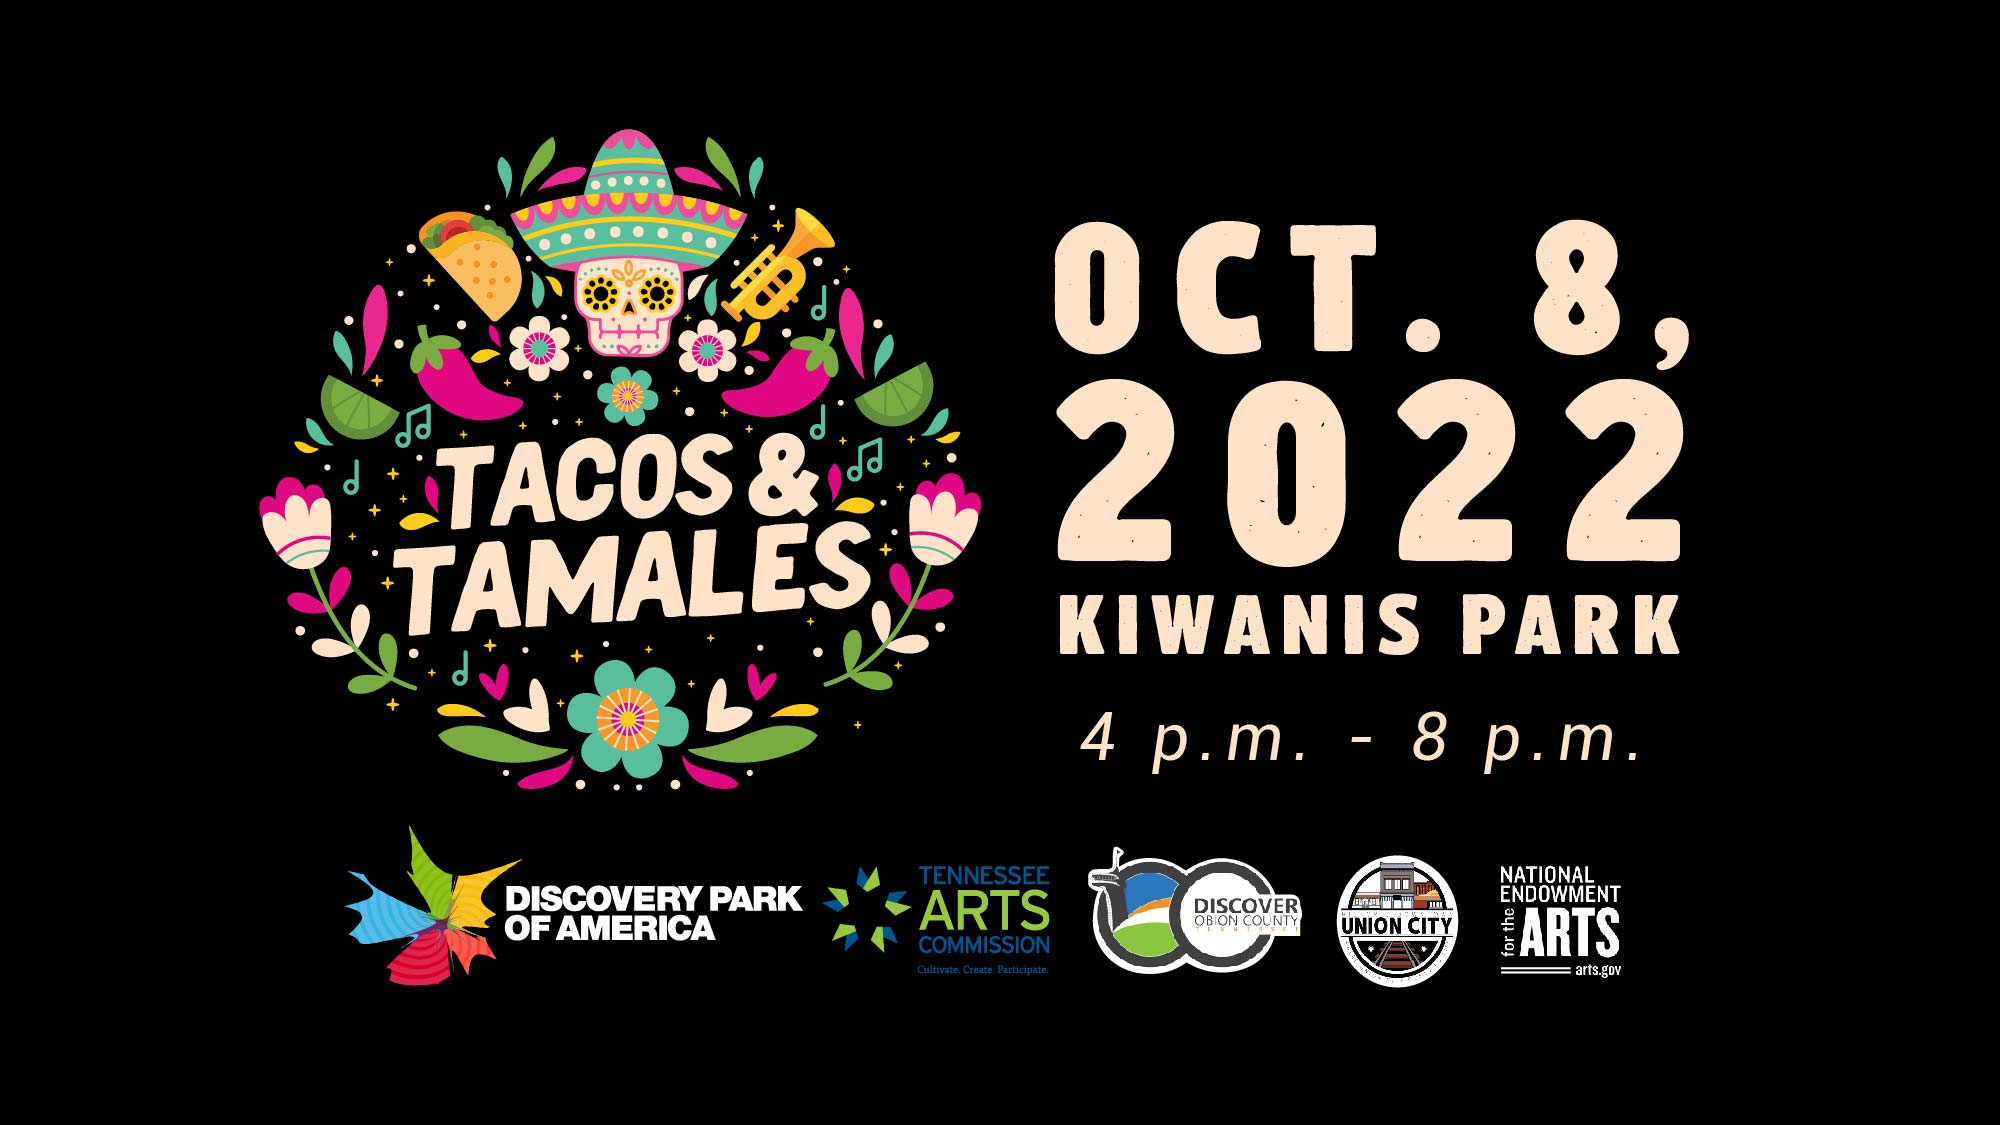 Tacos & Tamales at Kiwanis Park